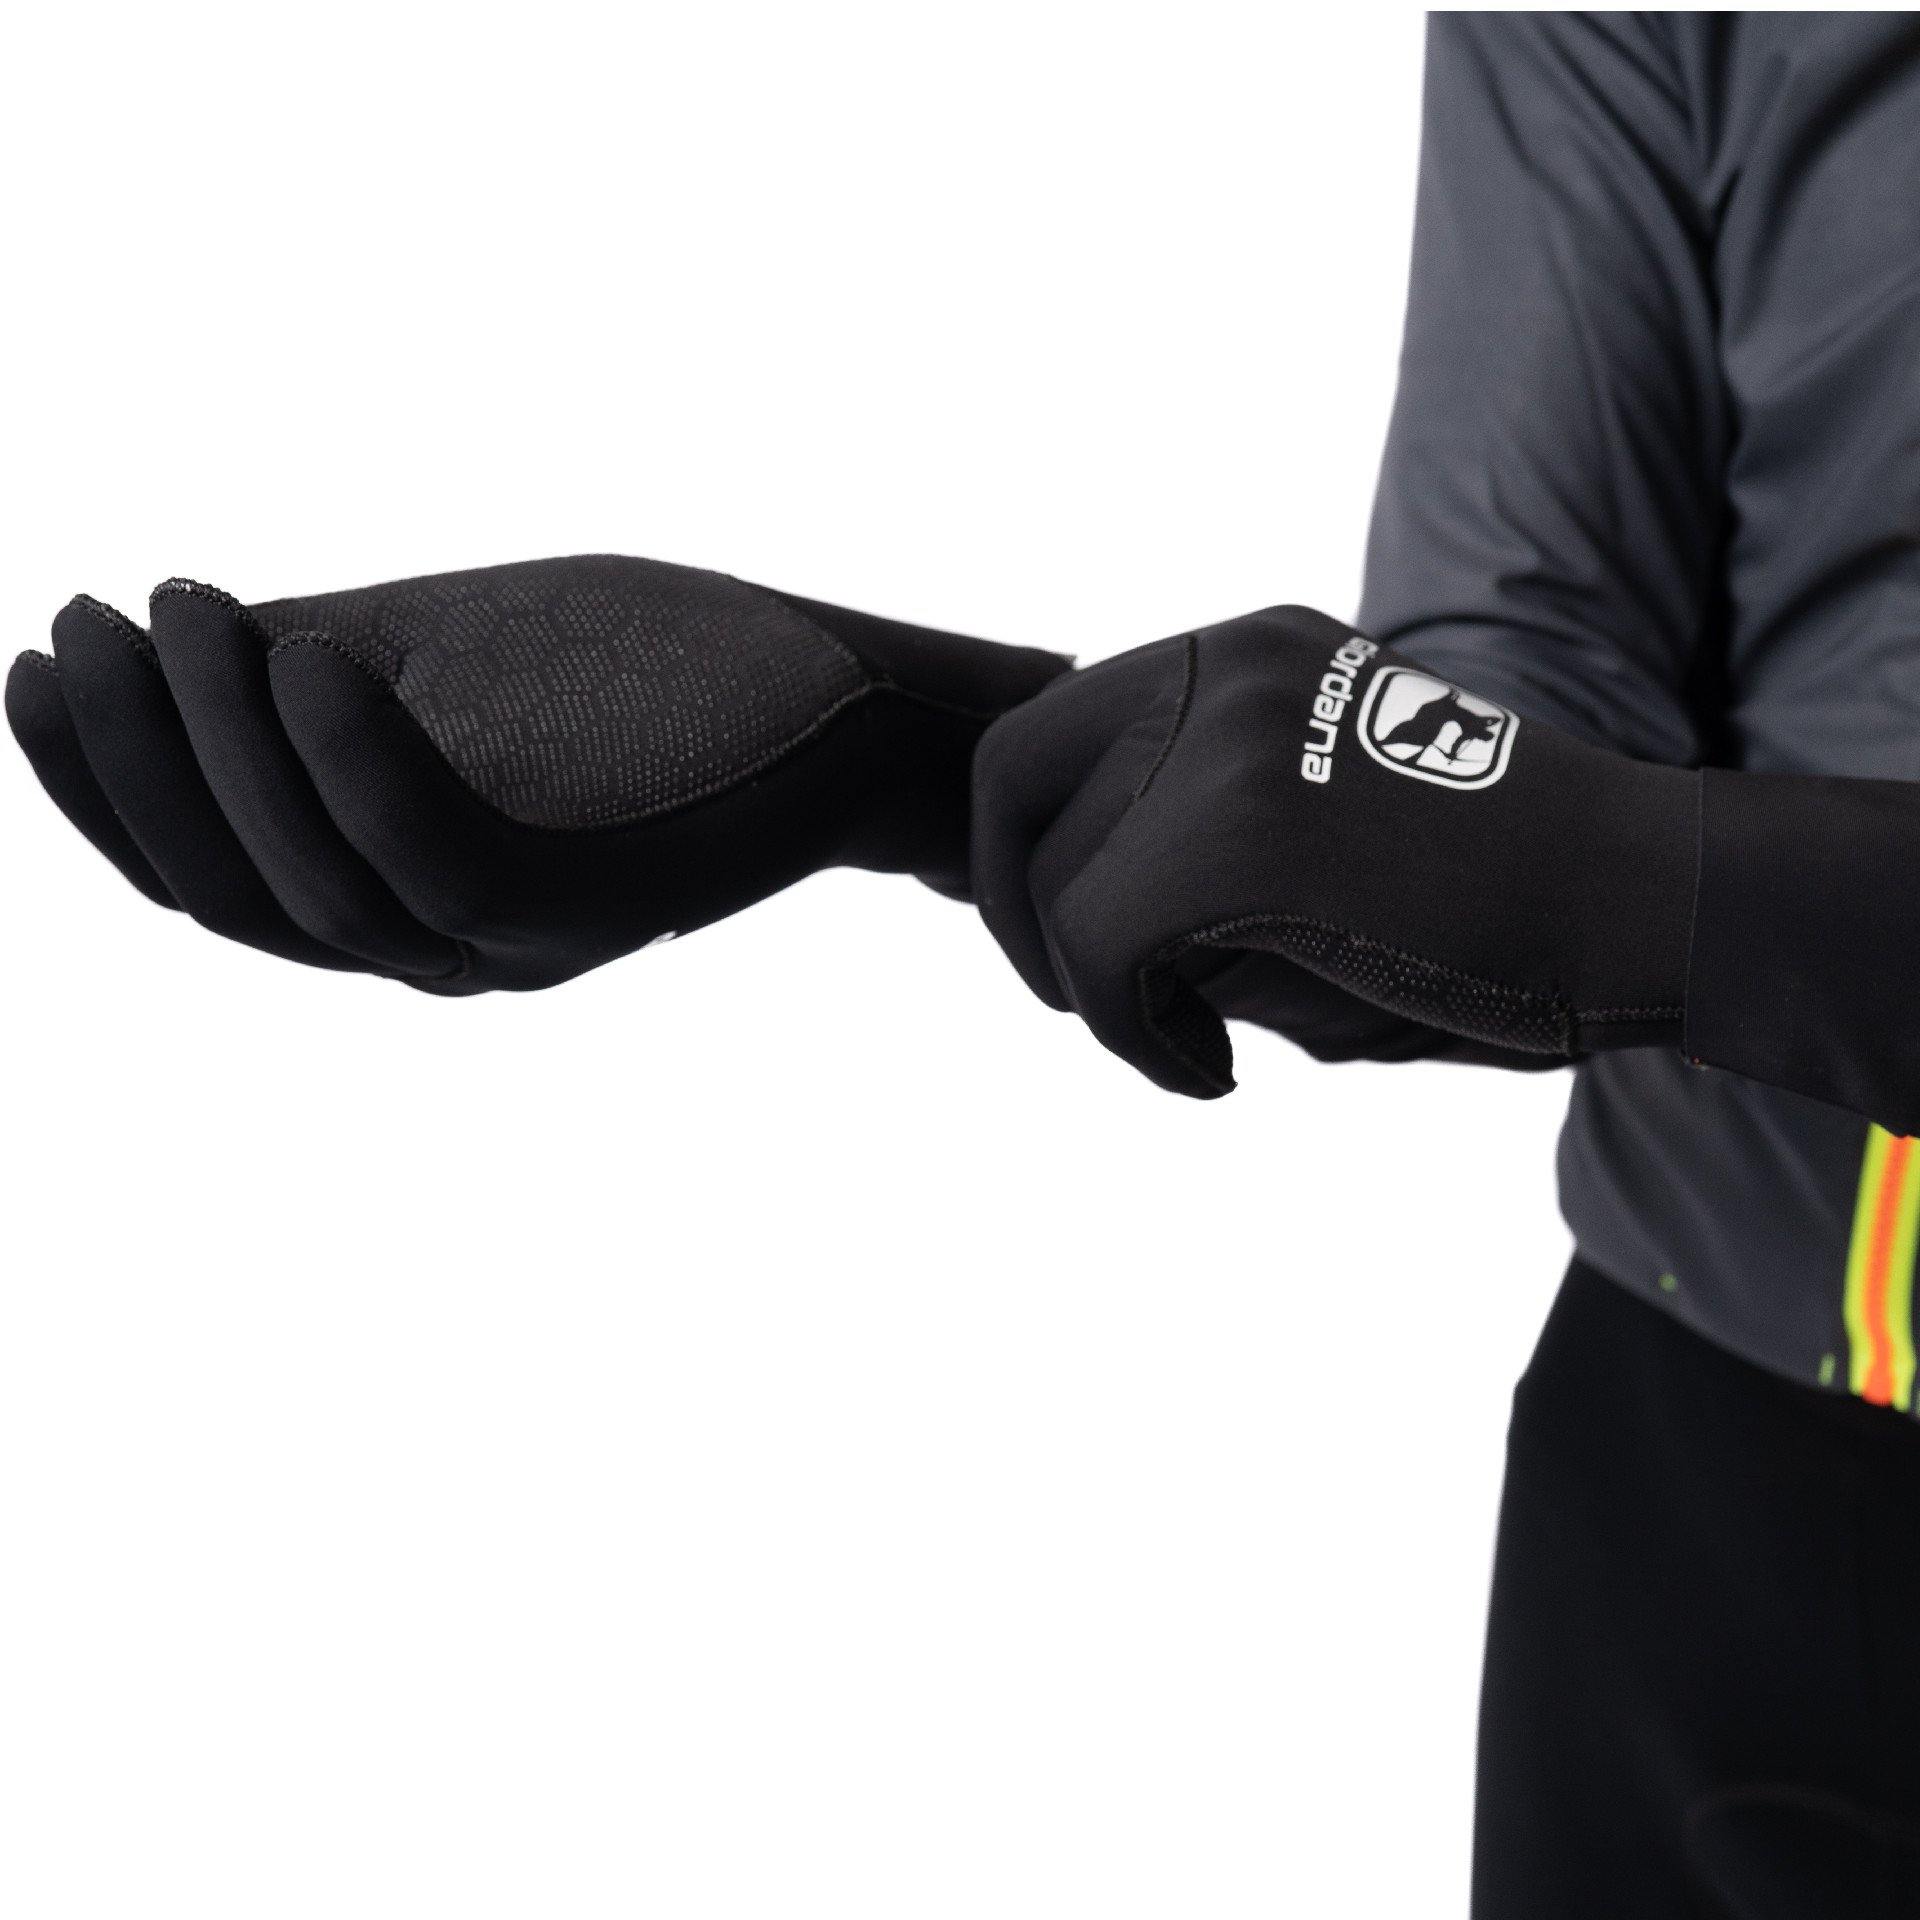 Giordana Cycling - Neoprene Winter Gloves